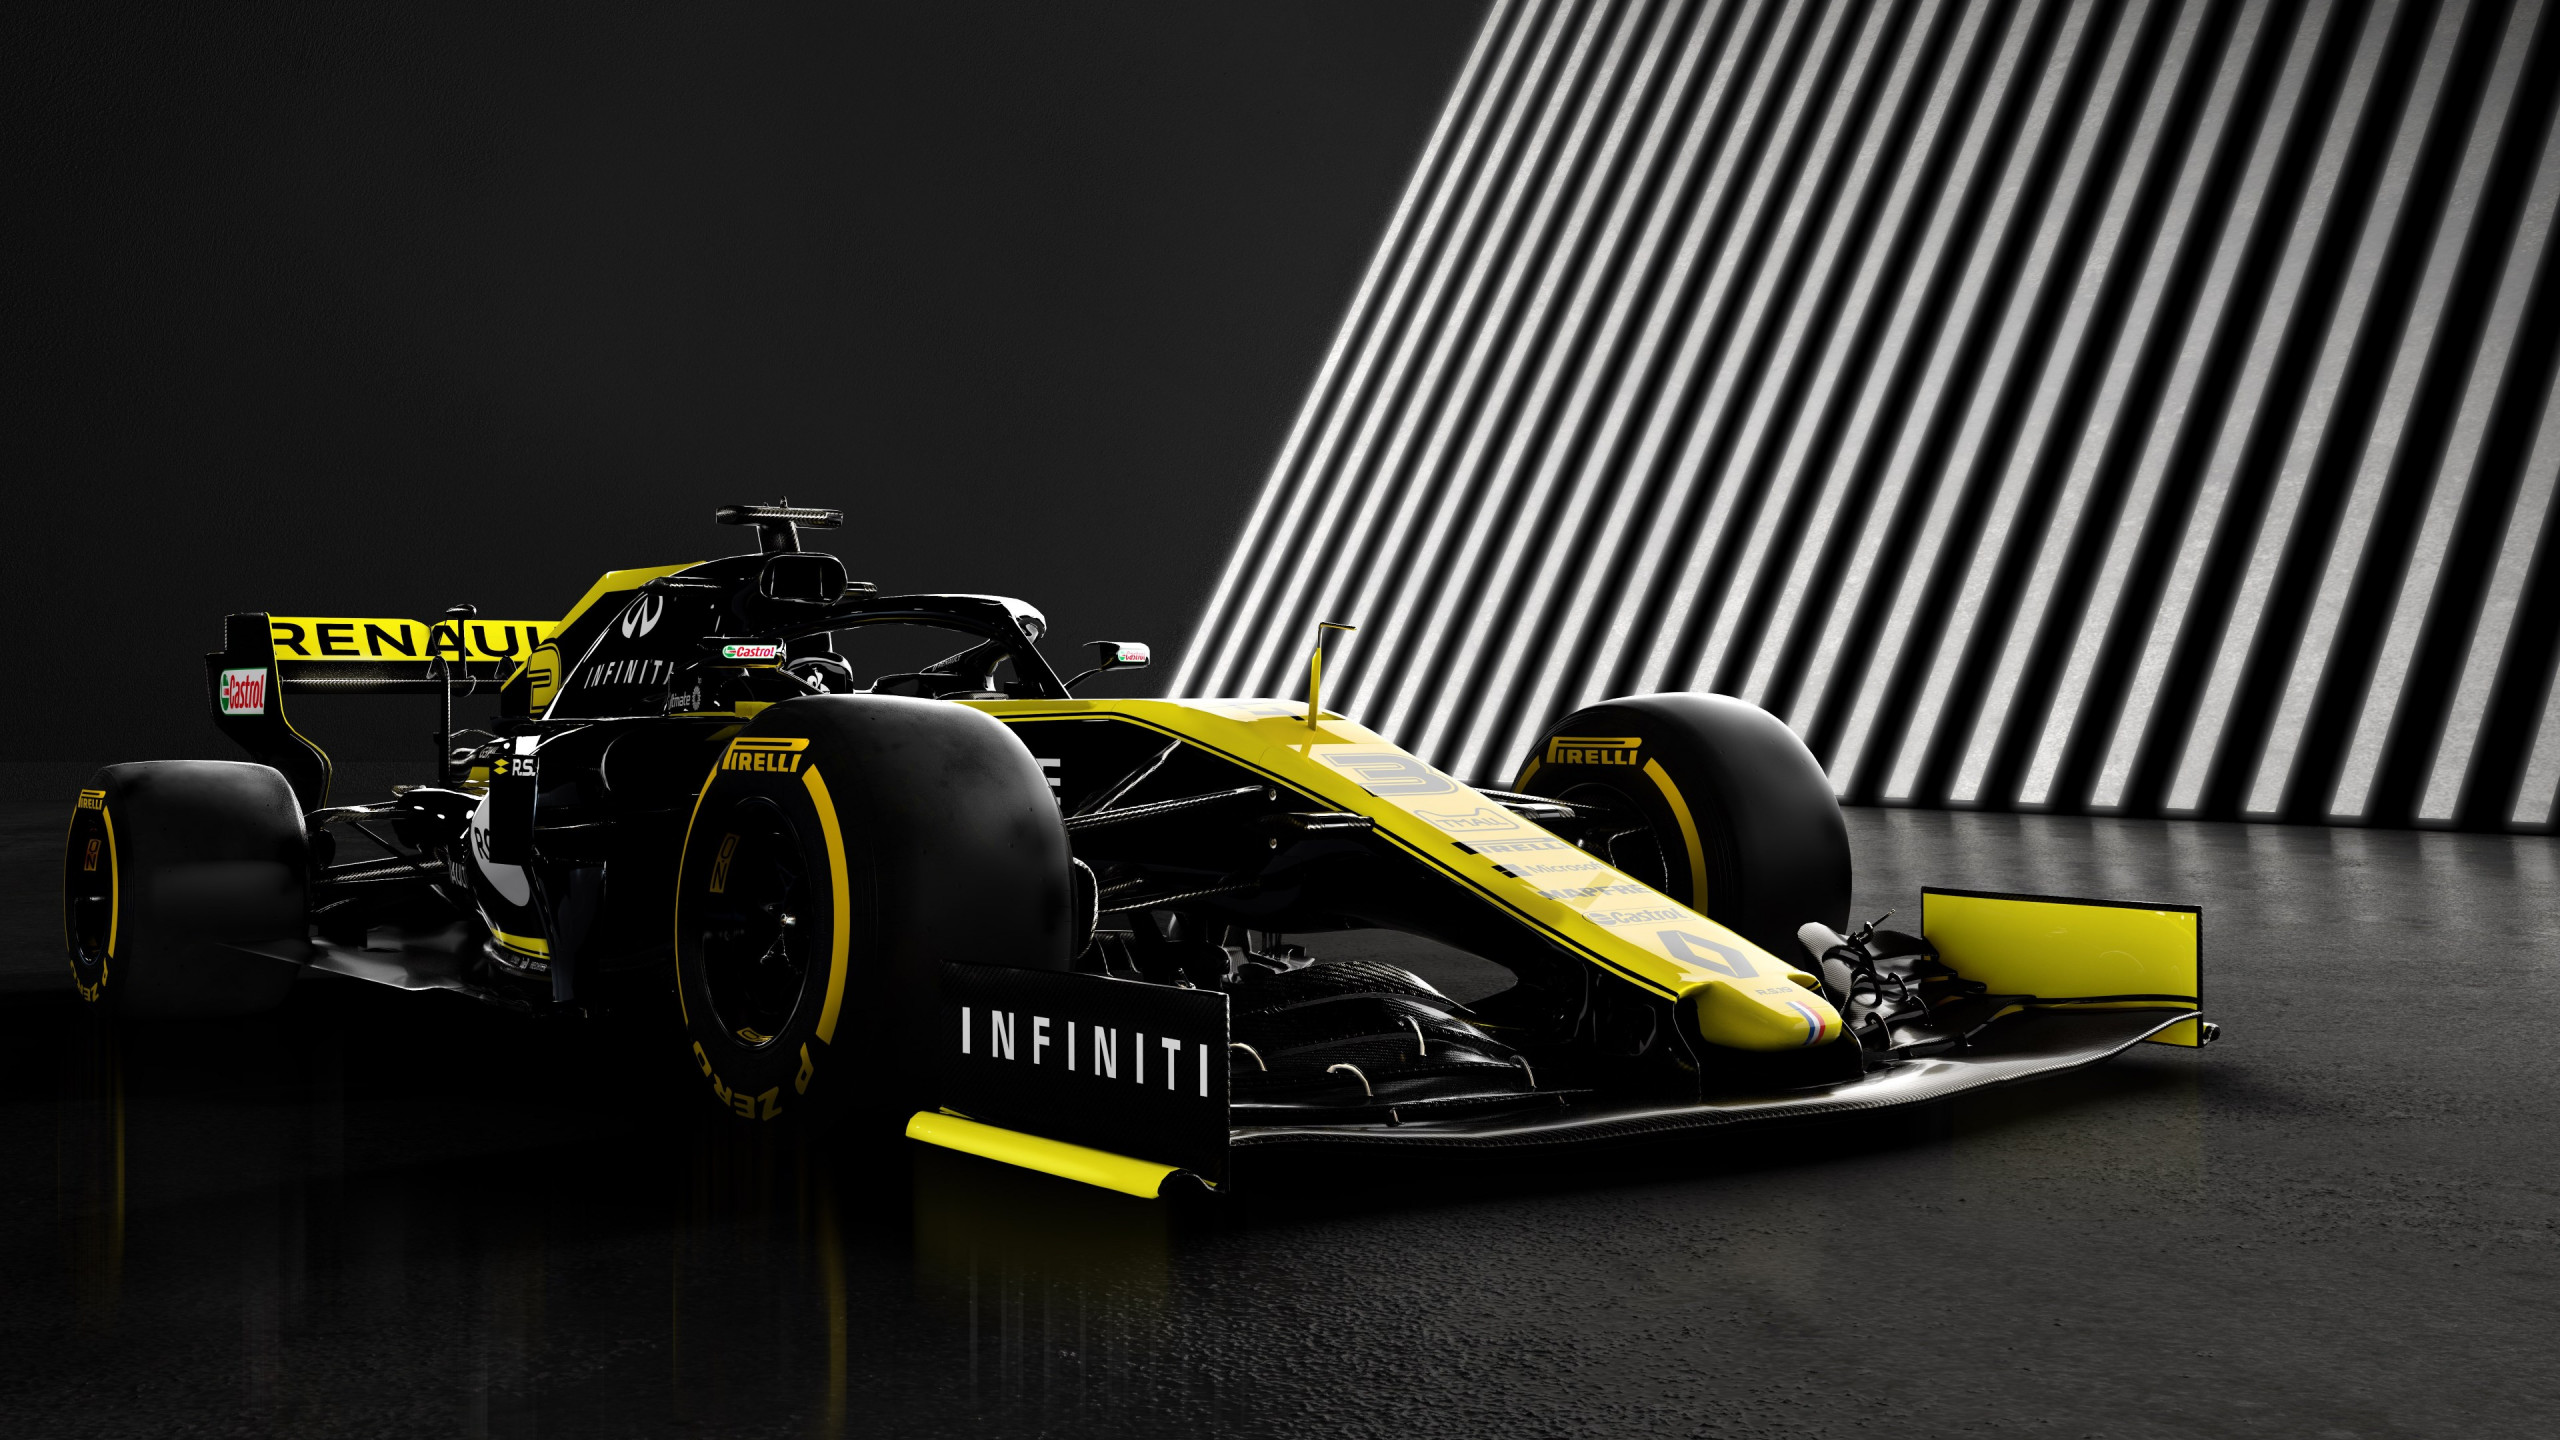 Renault F1 RS19 wallpaper 2560x1440